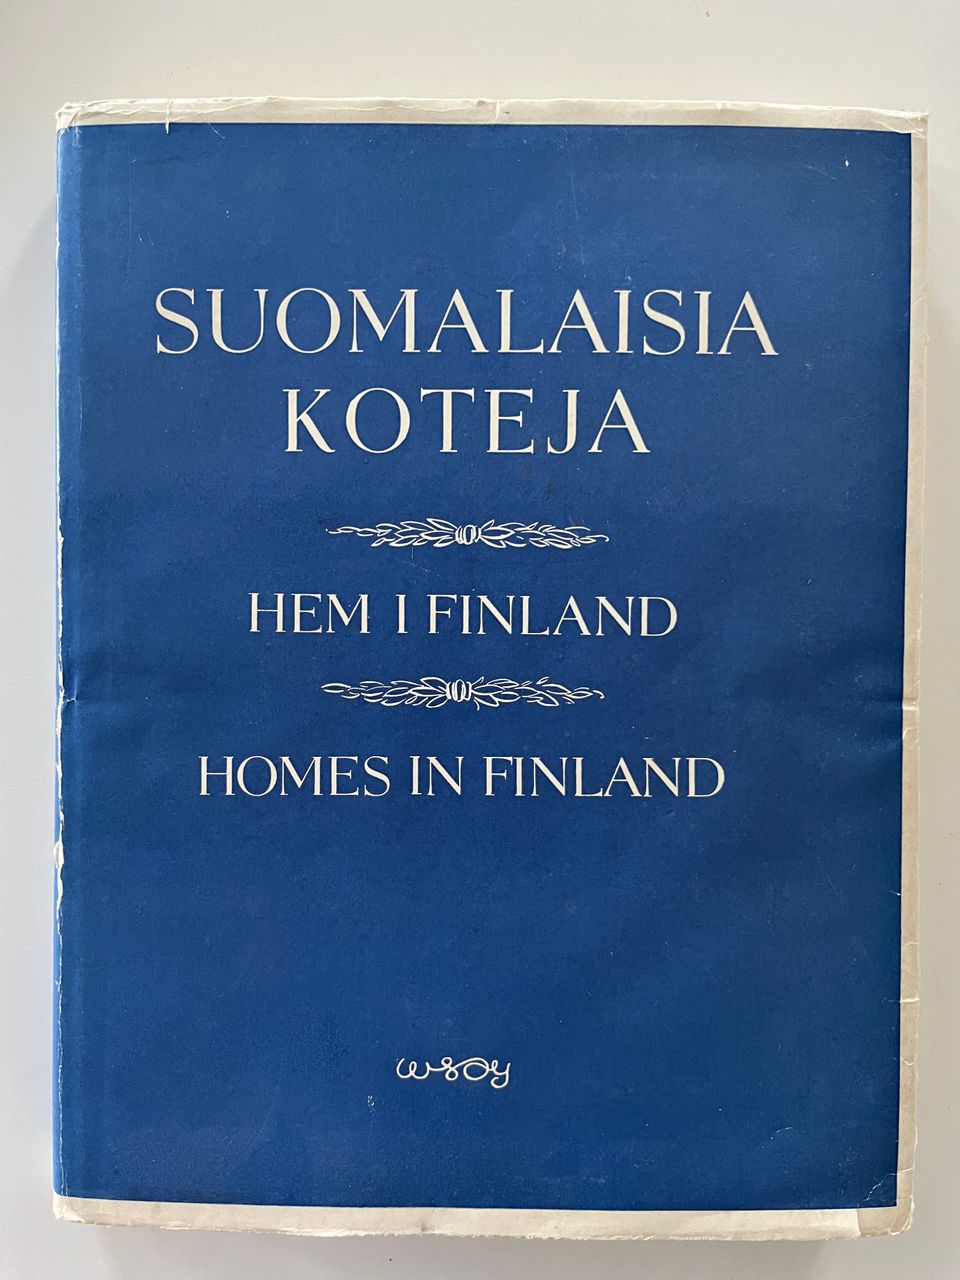 Suomalaisia koteja - Hem i Finland - Homes in Finland (1949)